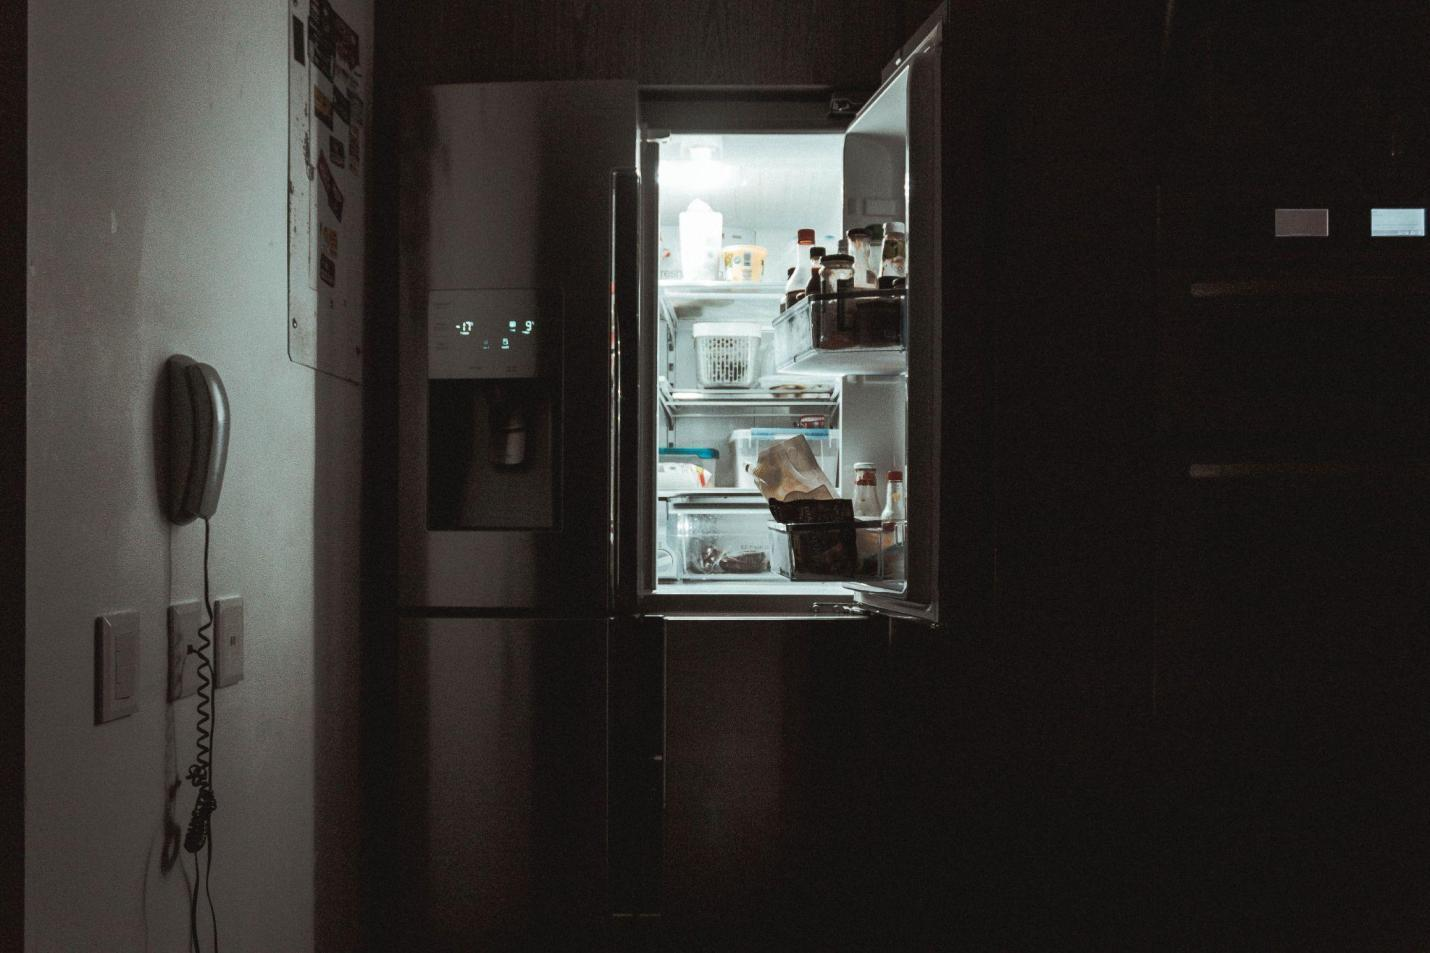 Quanti watt consuma un frigorifero